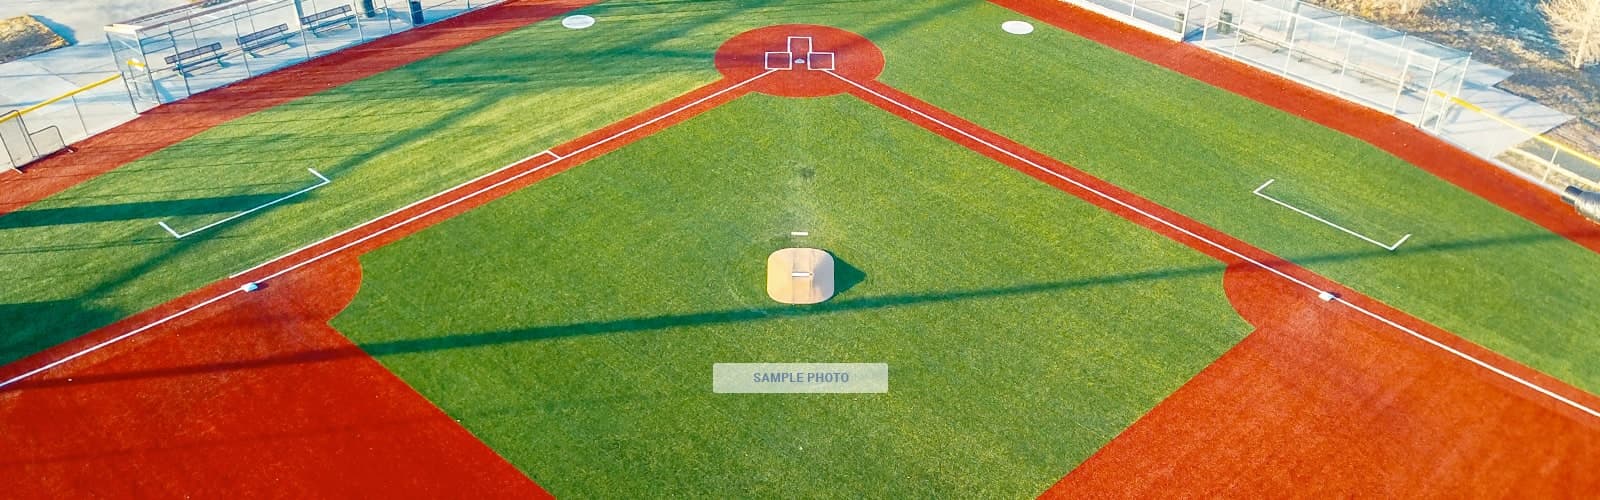 Linden Middle School Field - Baseball in Linden Michigan